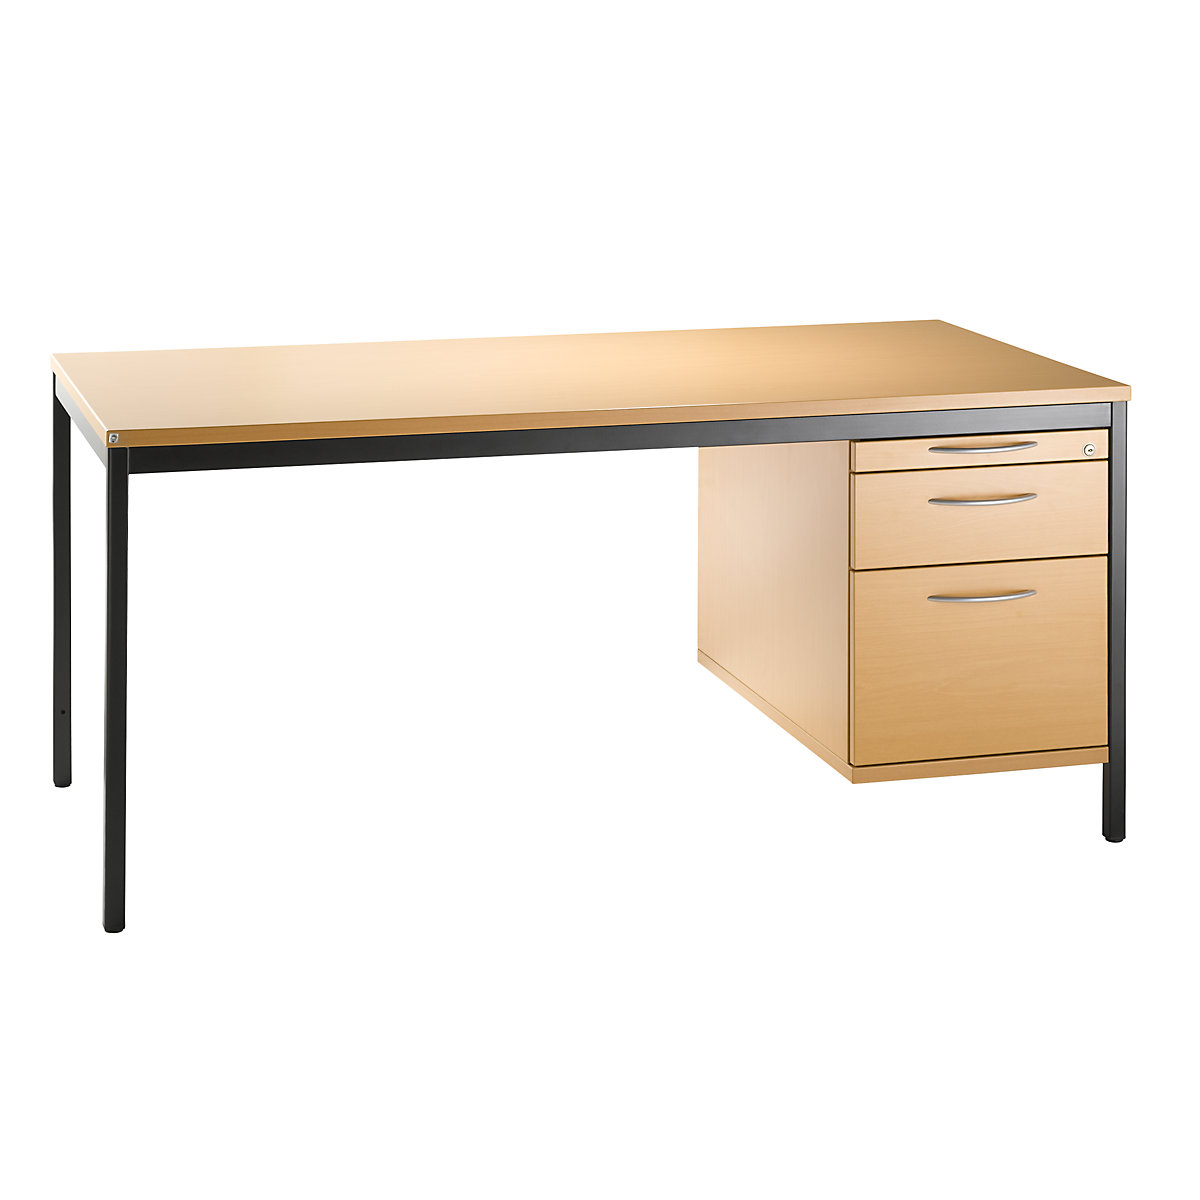 Base cupboard LENA, HxWxD 540 x 434 x 800 mm, 1 utensil drawer, 1 drawer, 1 suspension file drawer, beech finish-5